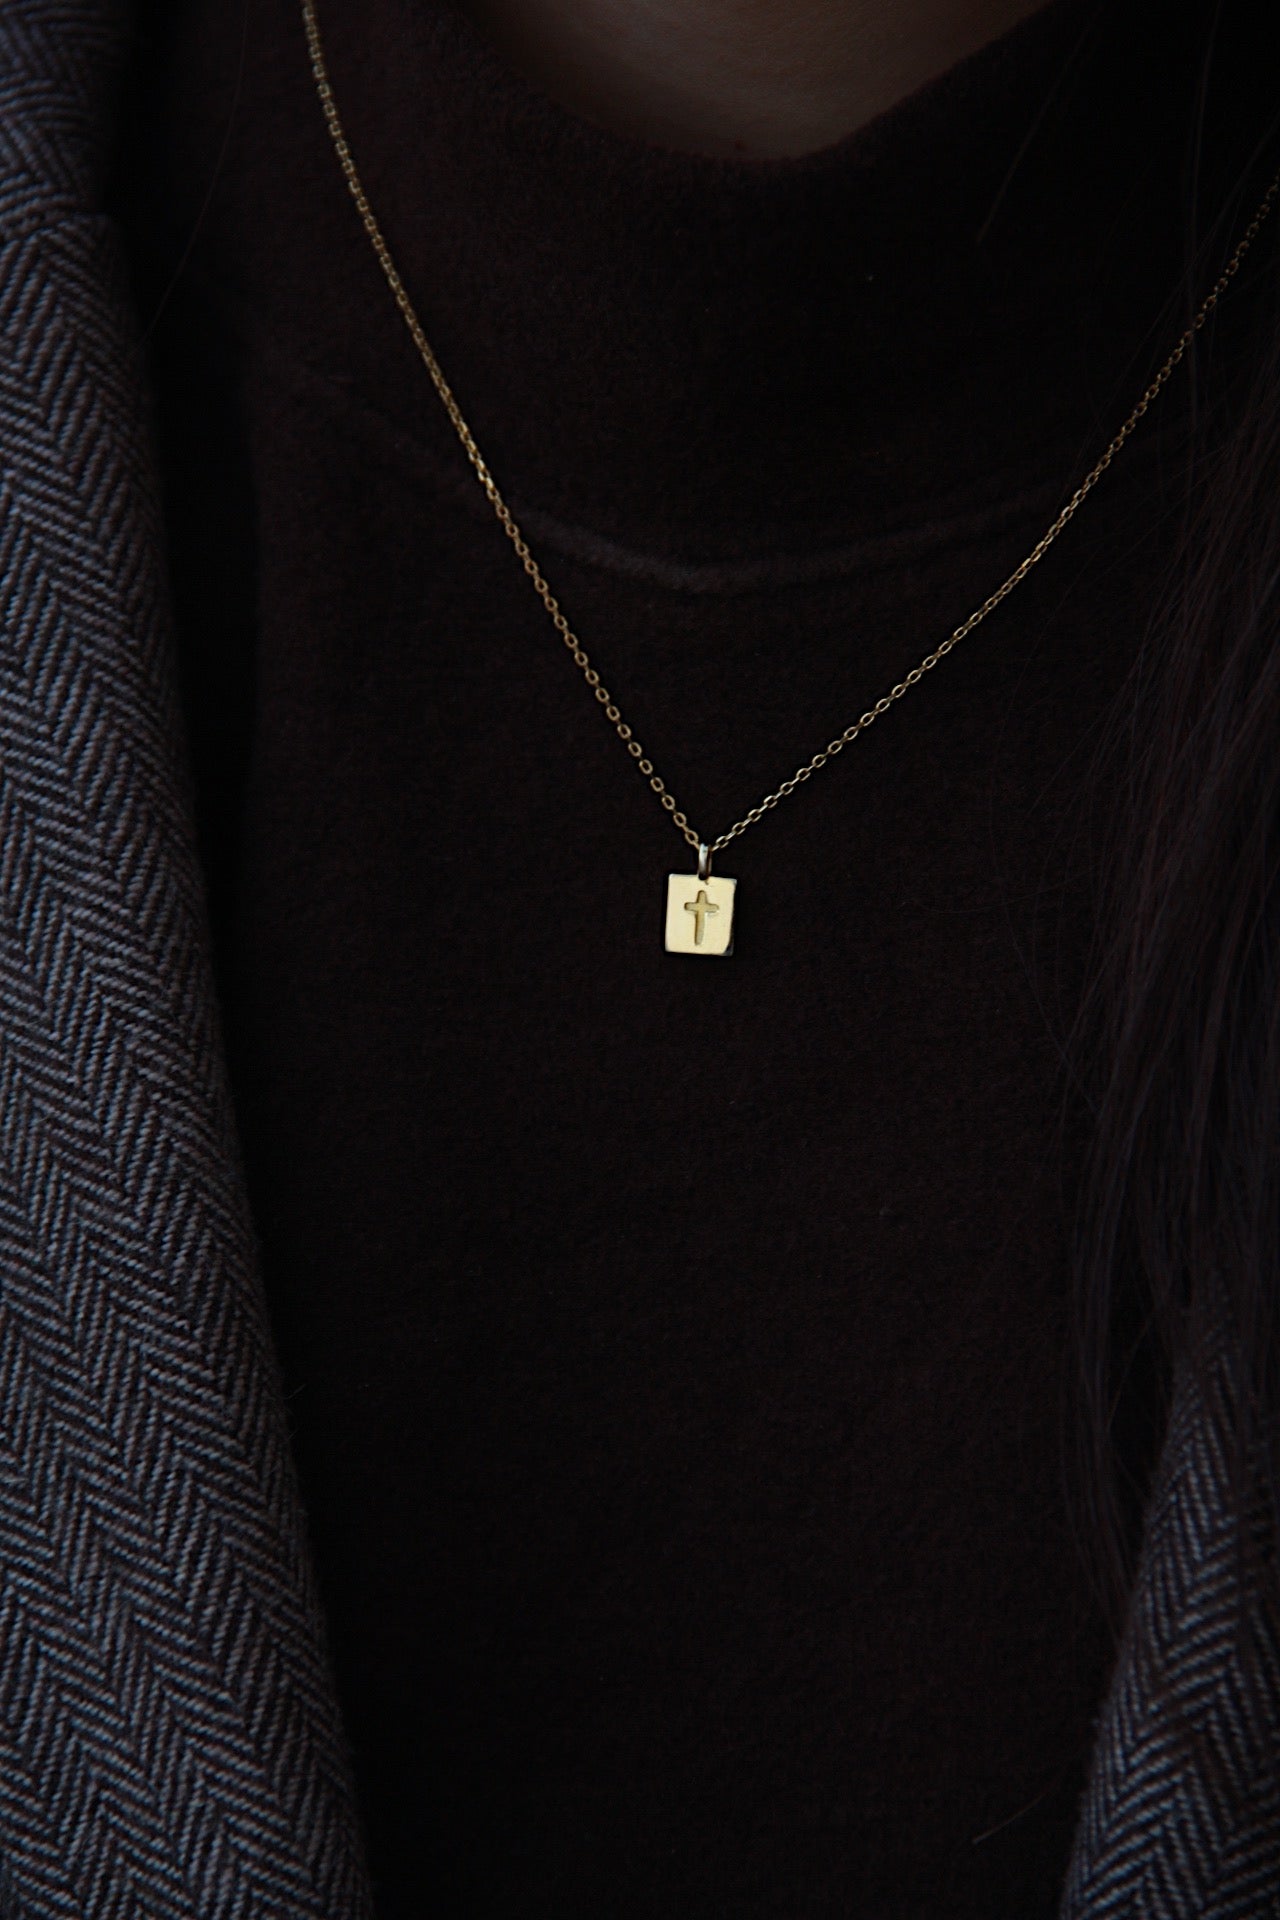 French-style Cross Necklace 法风镂空小十字架方块项链